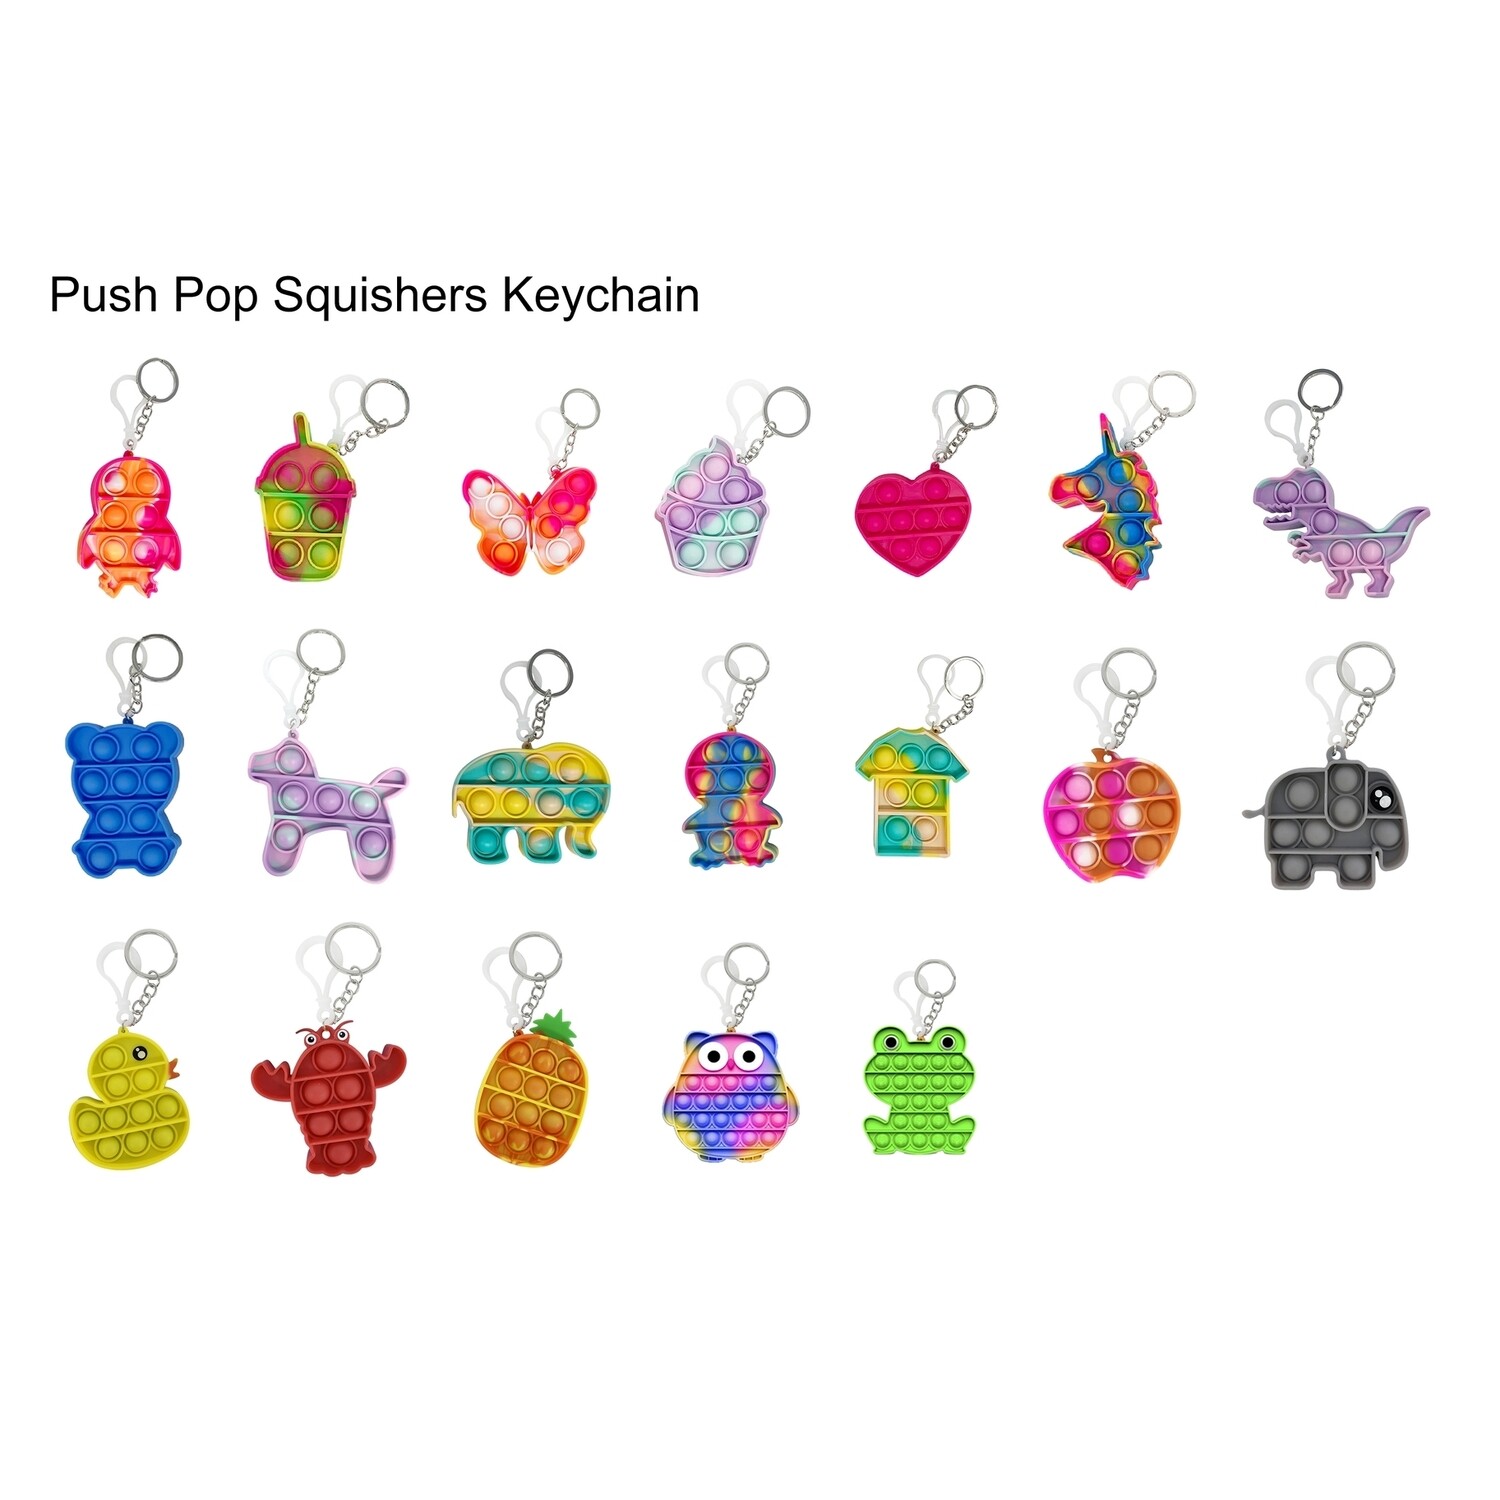 Push Pop Squishers Keychain